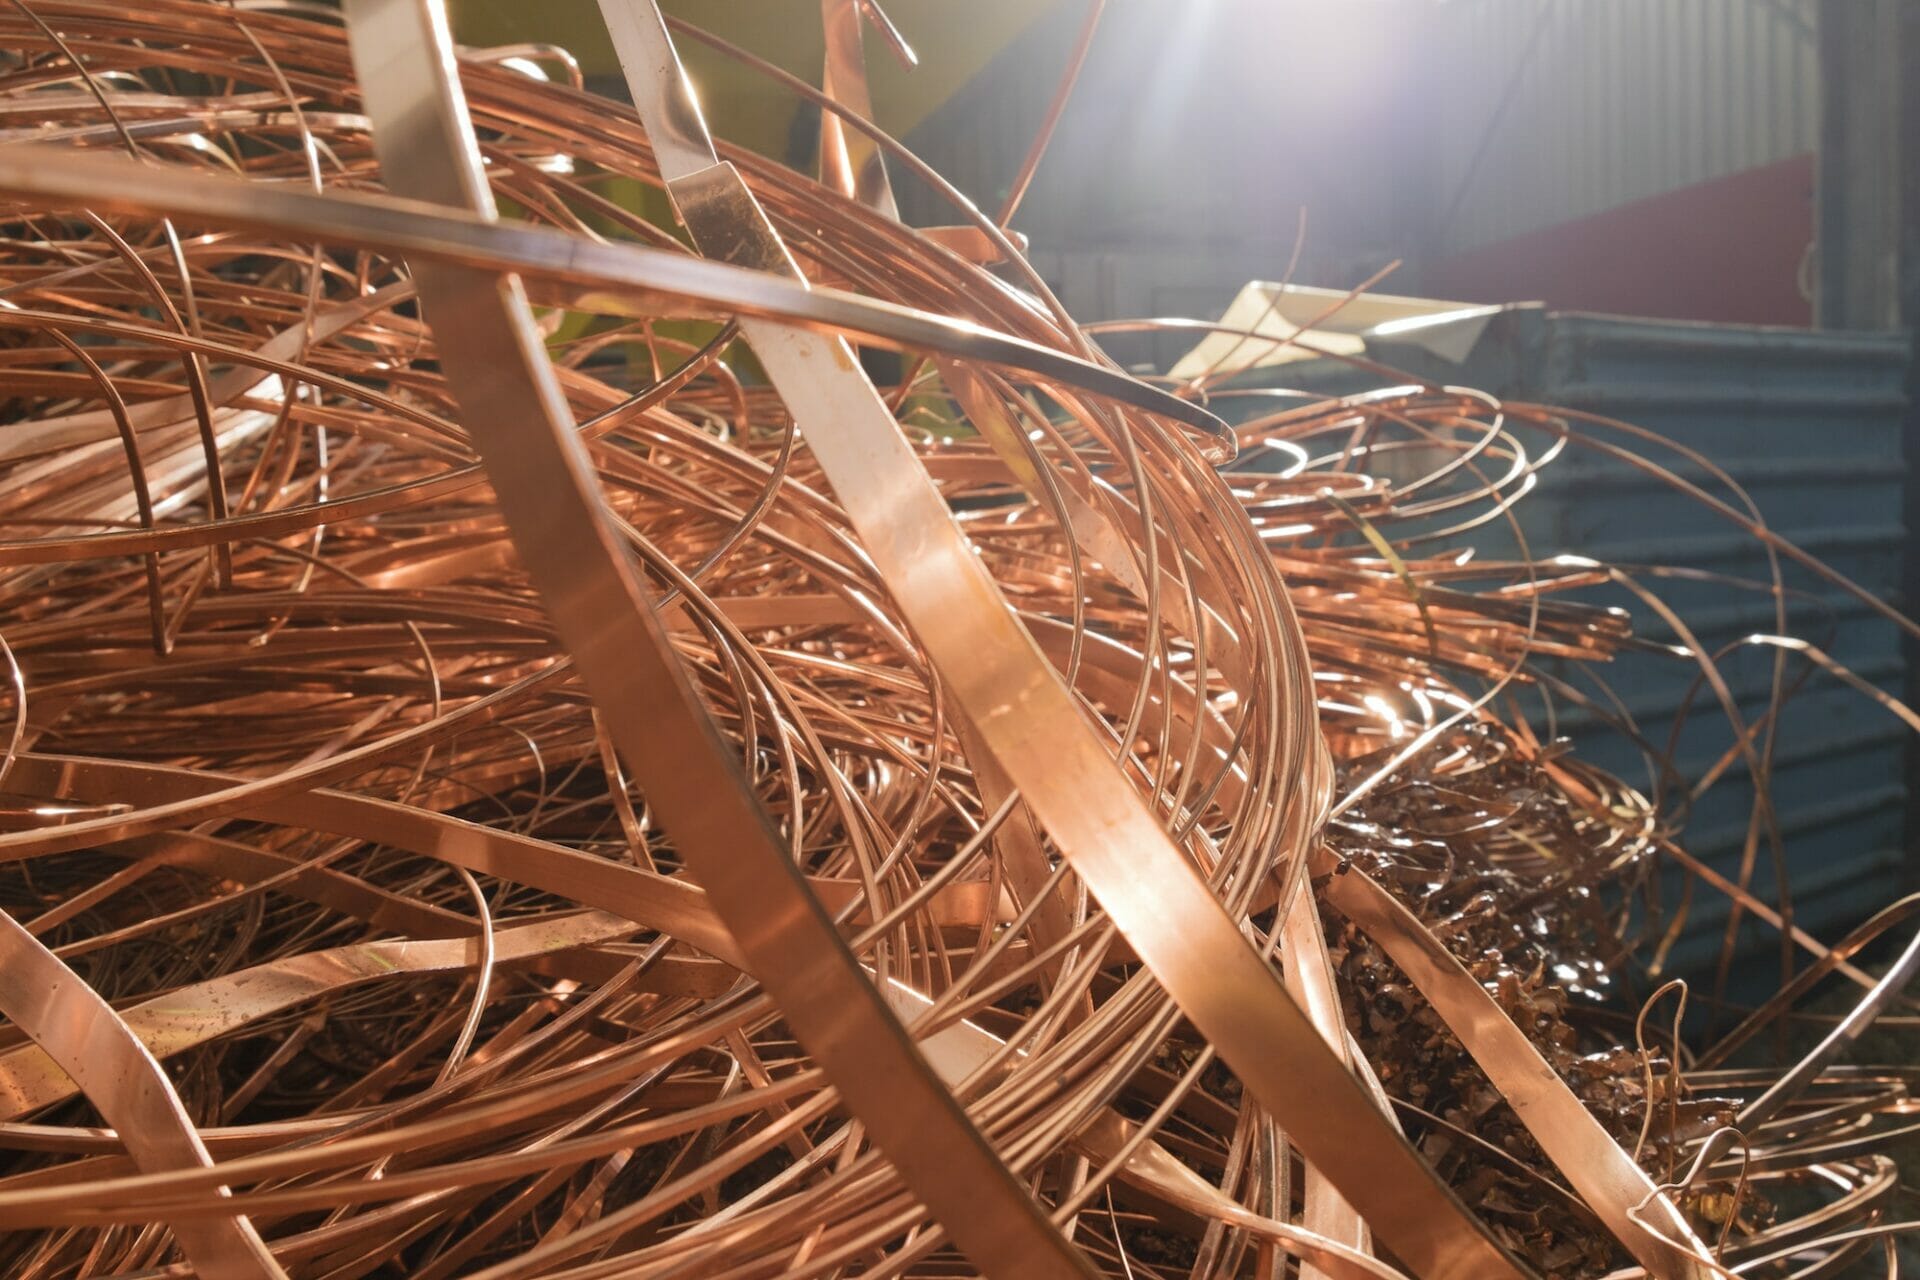 Copper in a scrap metal recycling plant